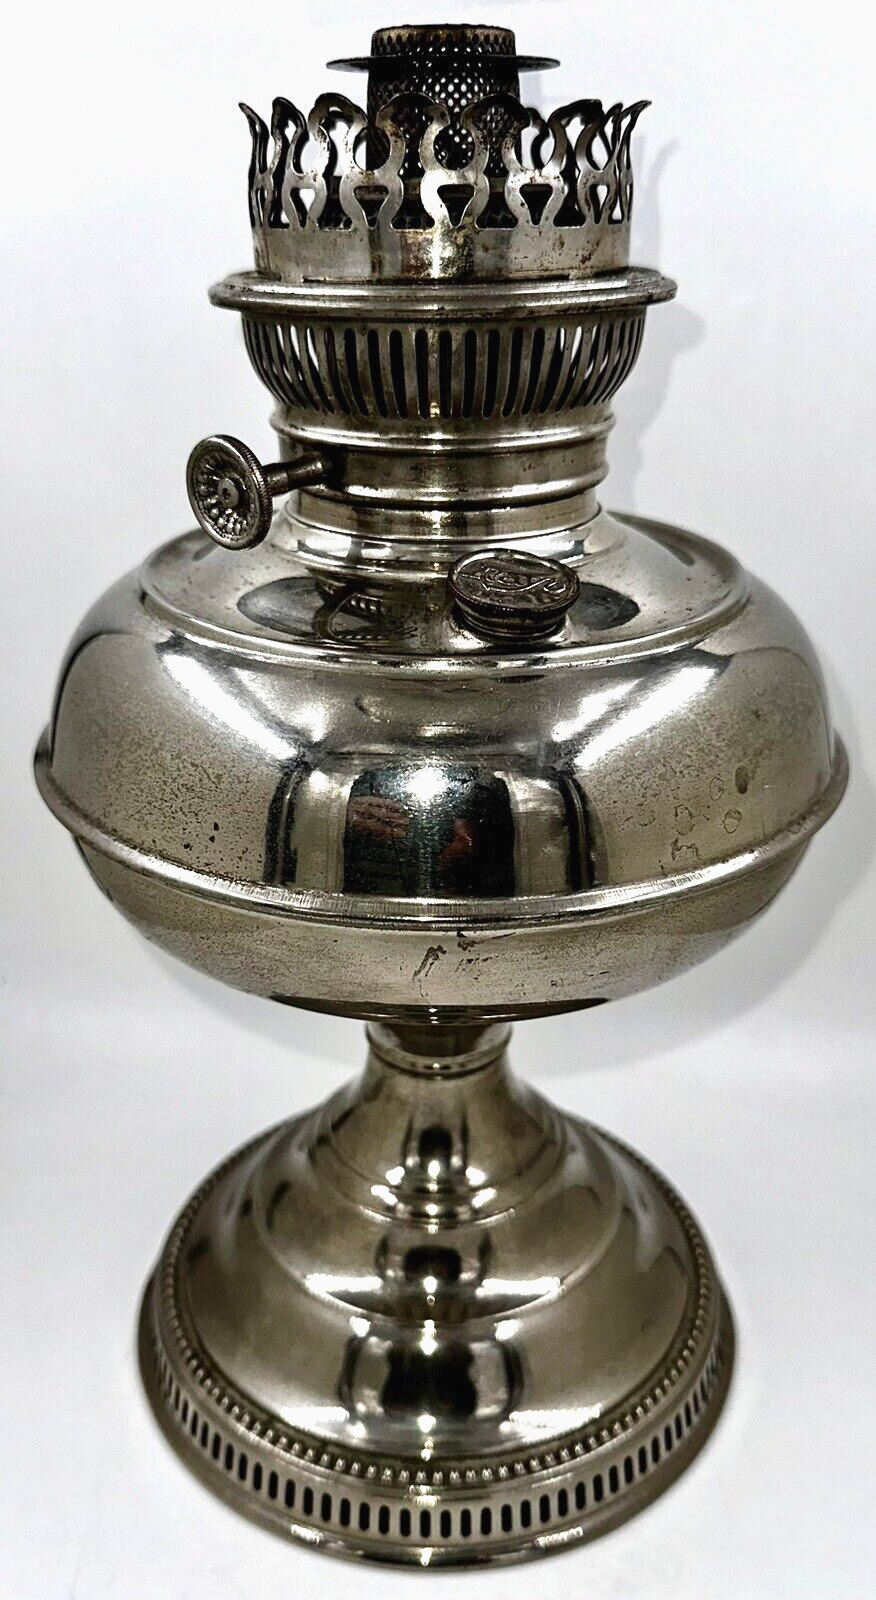 Antique RAYO Kerosene Oil Lamp with Flame Spreader, Burner 1905 Nickel Plated